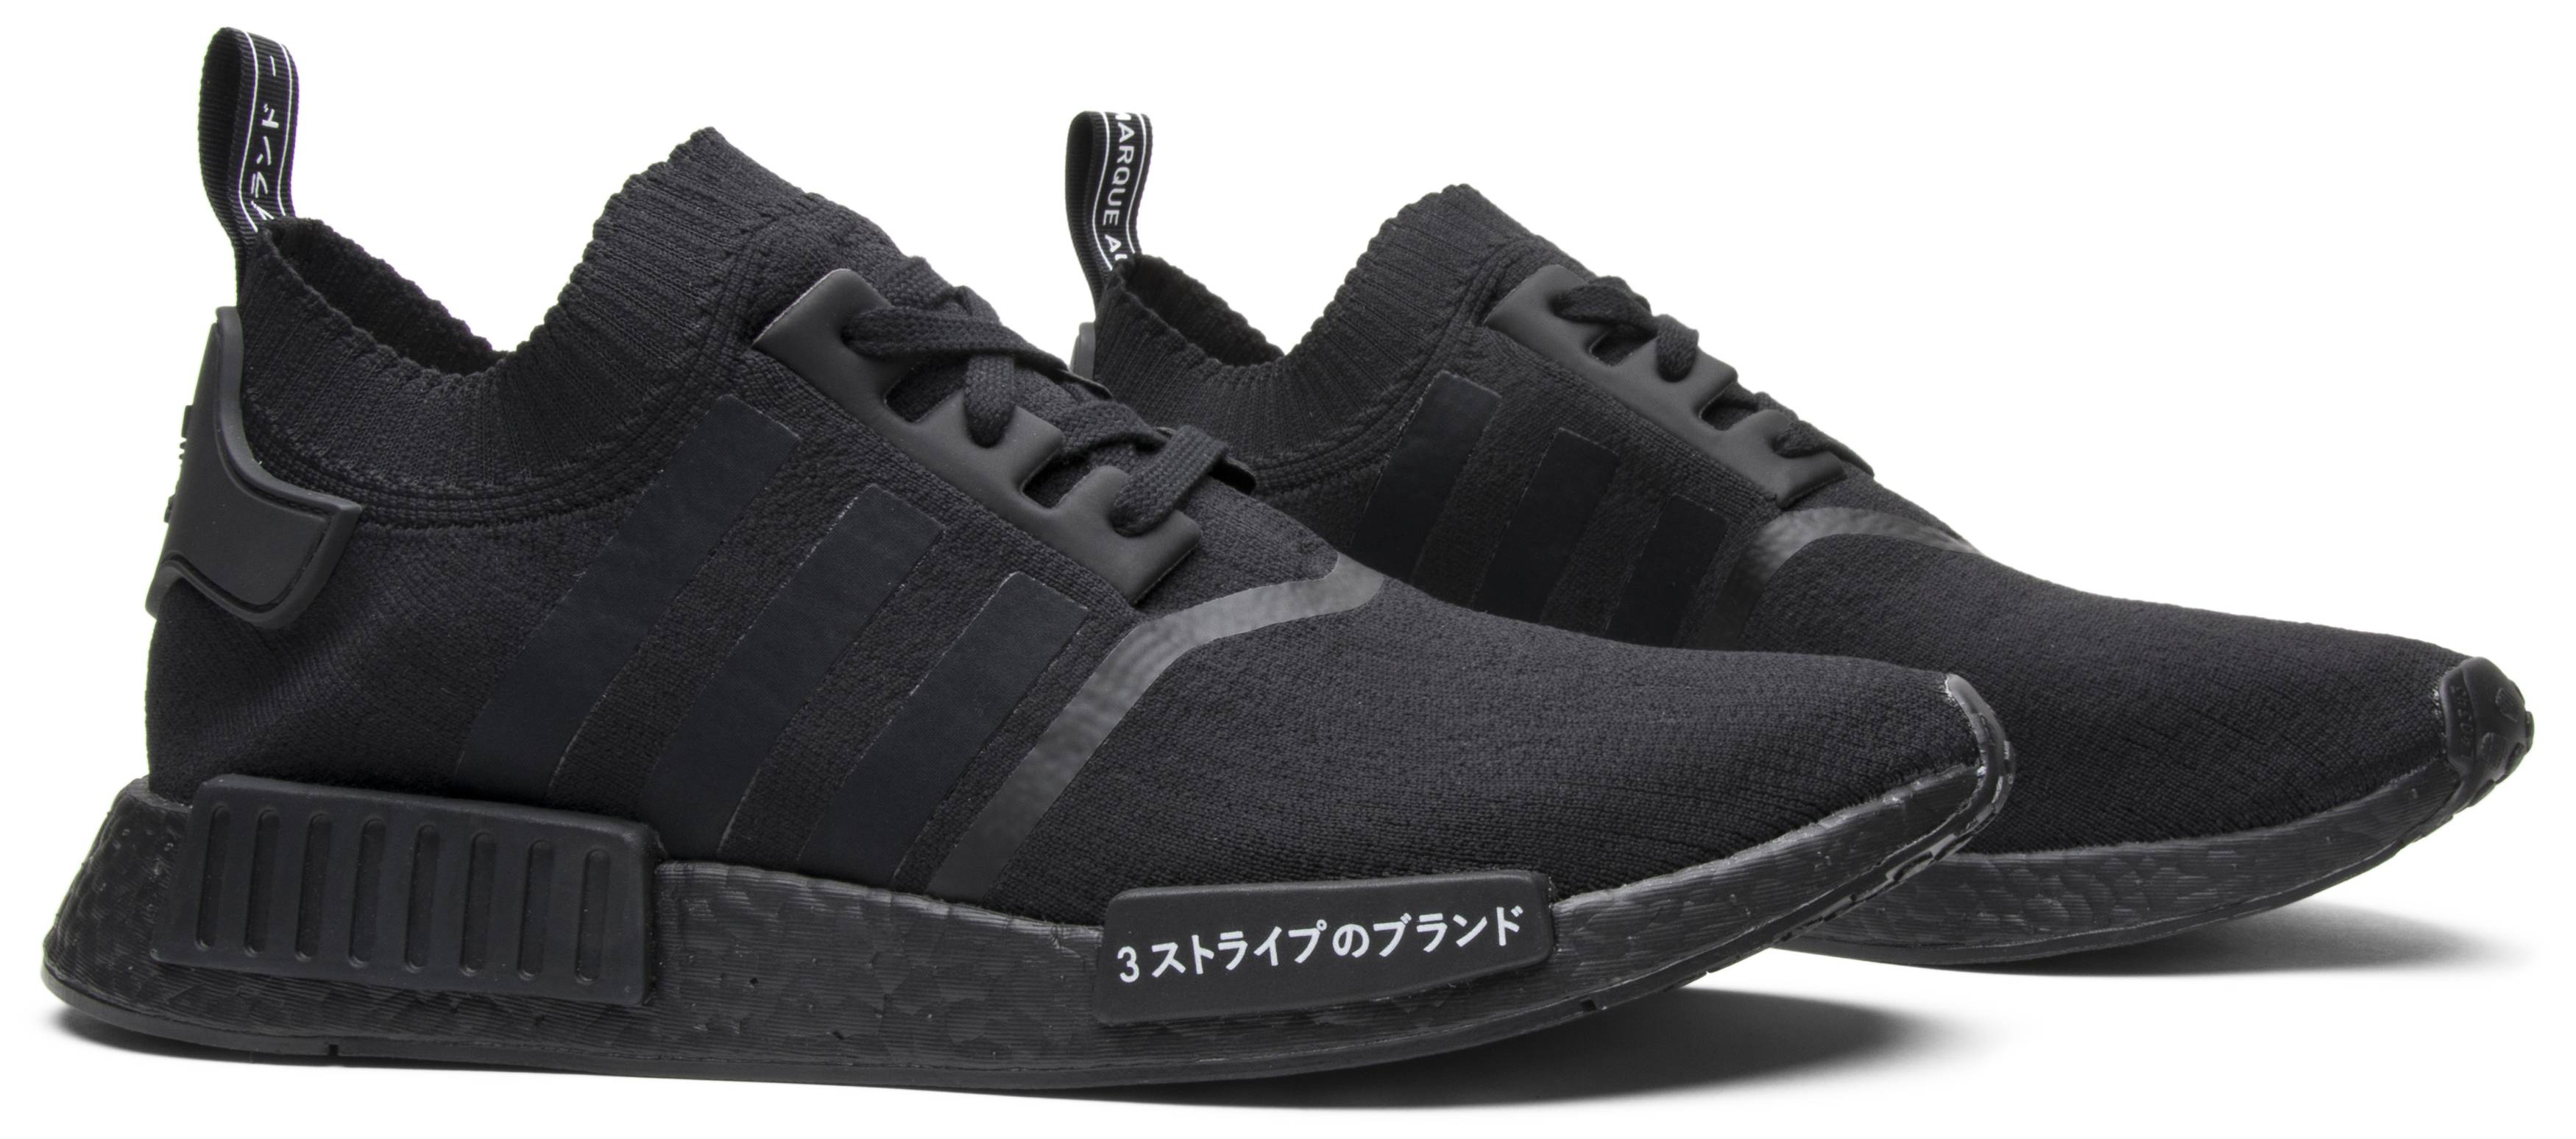 NMD_R1 Primeknit 'Japan Triple Black' - adidas - BZ0220 | GOAT